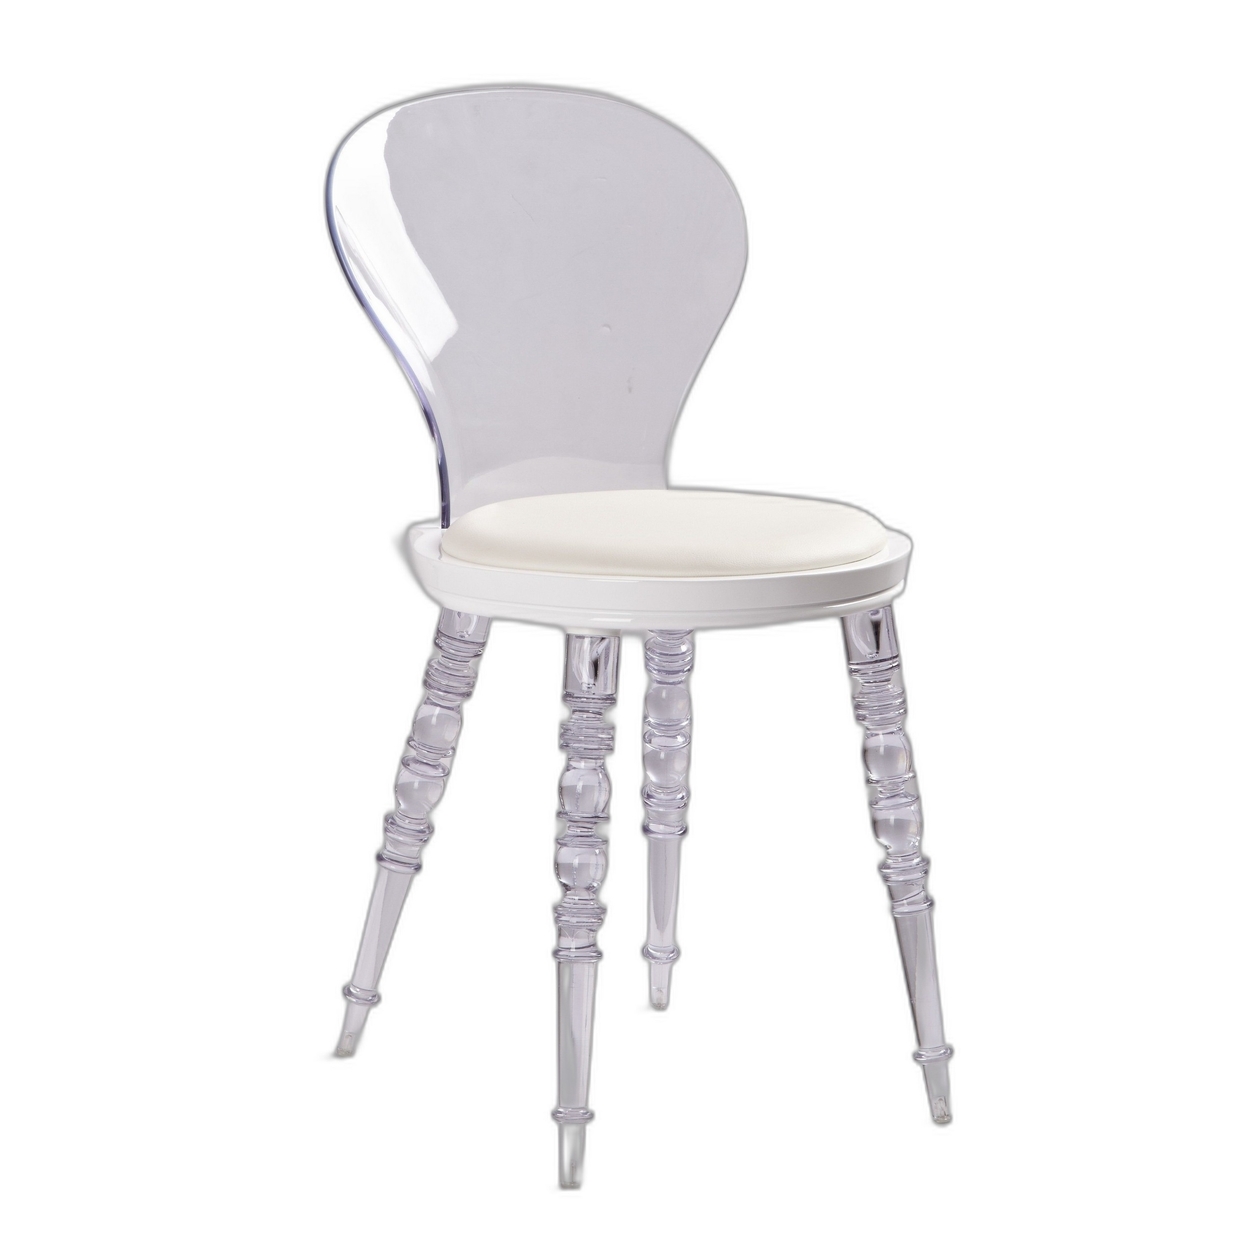 Rari 19 Inch Crystal Clear Armless Chair, Padded White Vegan Leather Seat - Saltoro Sherpi